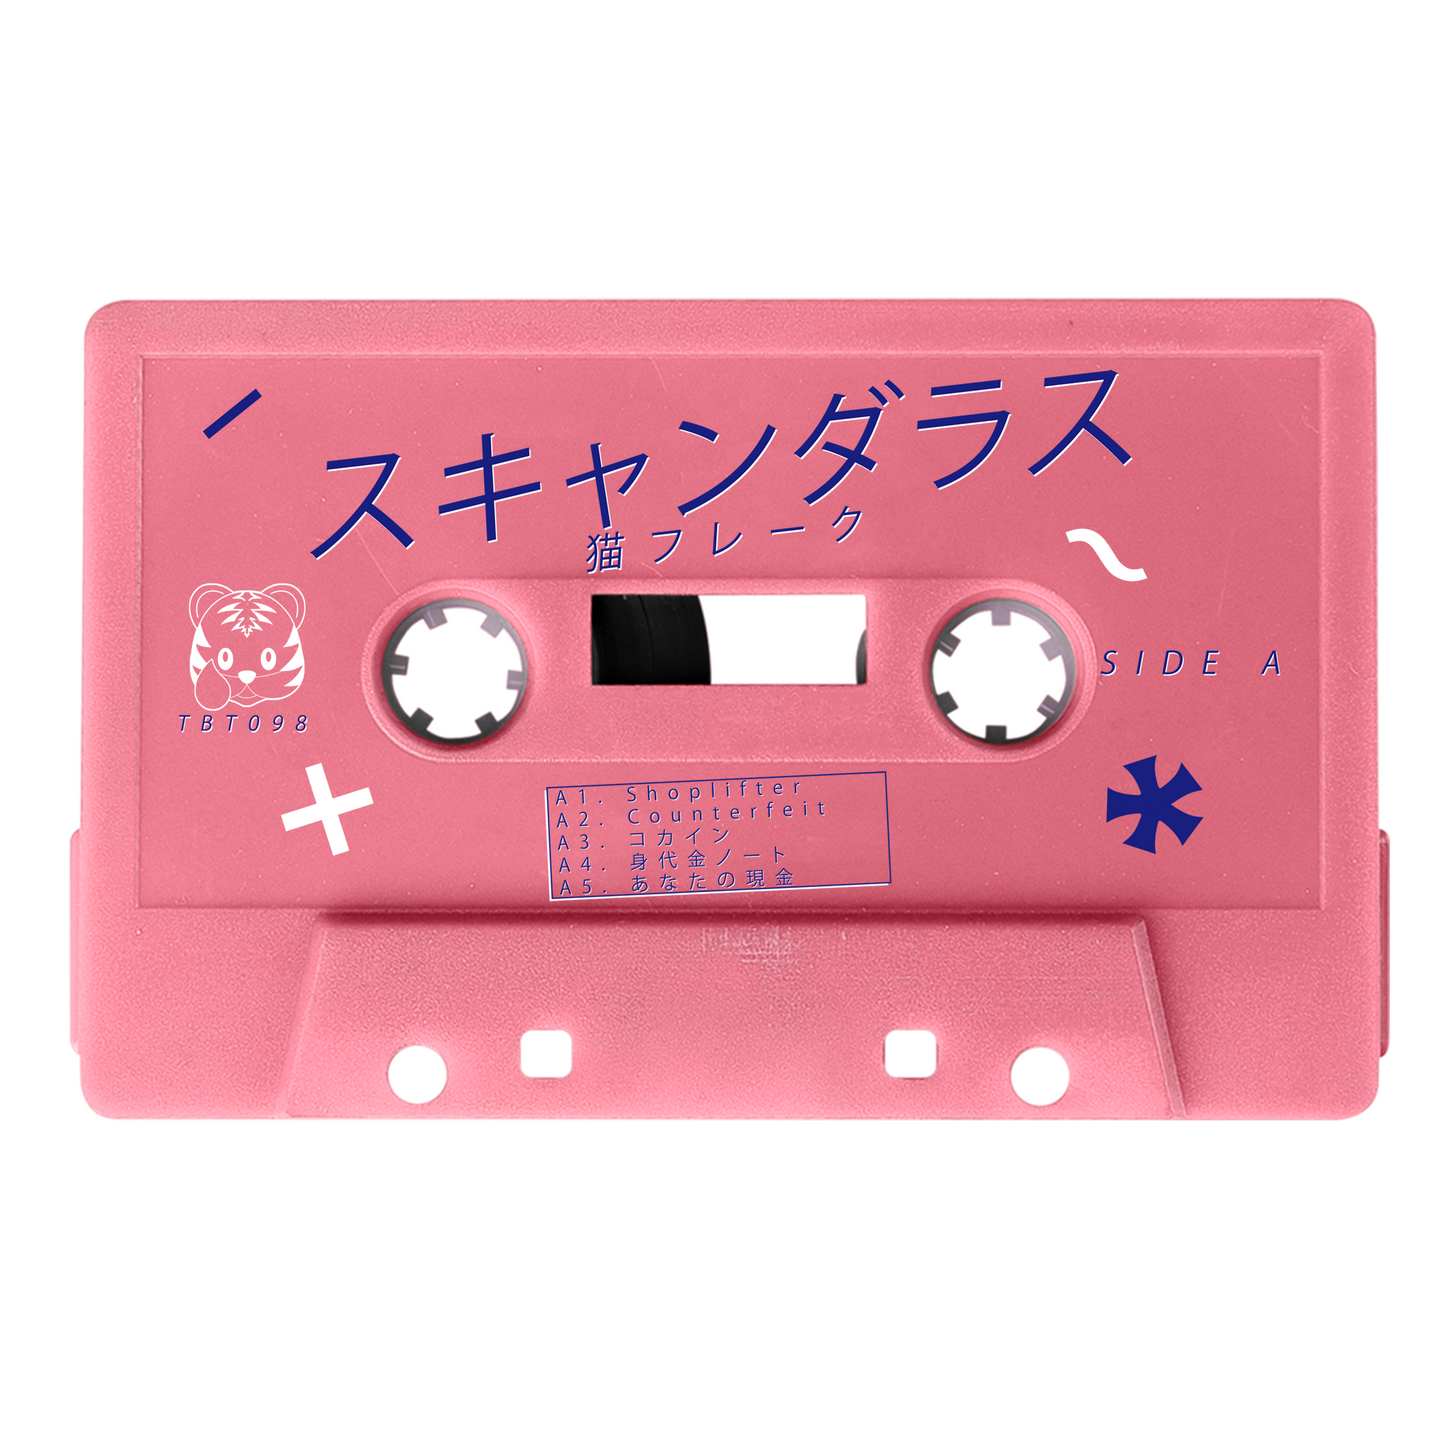 Neko Furēku - "scandalous スキャンダラス" Limited Edition Cassette Tape